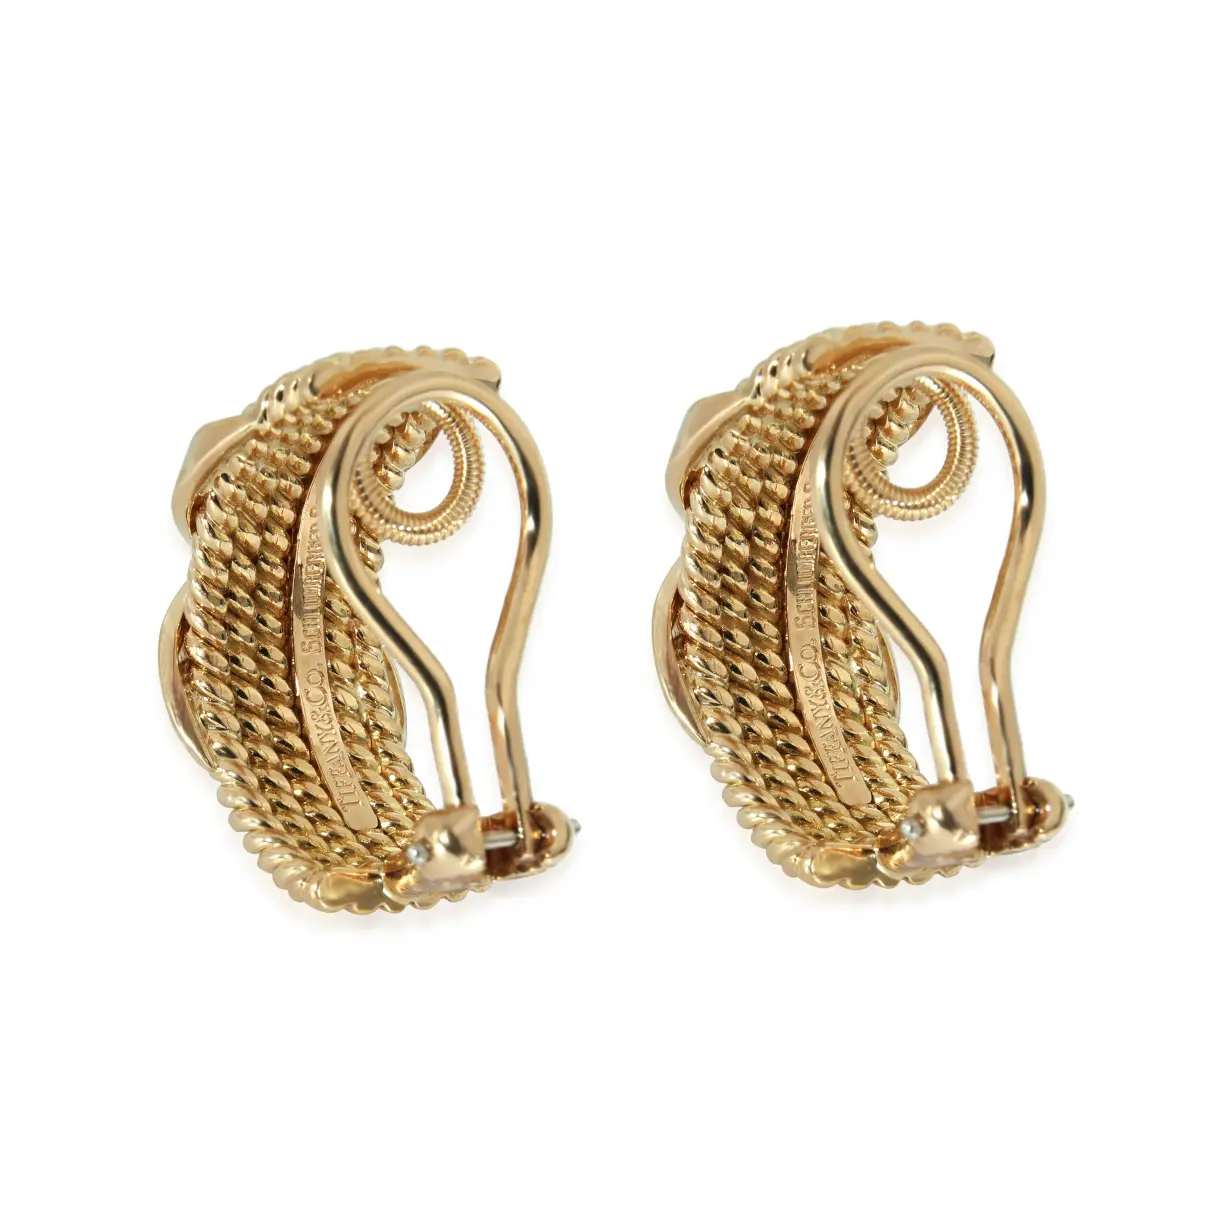 Buy Tiffany & Co Schlumberger yellow gold earrings online